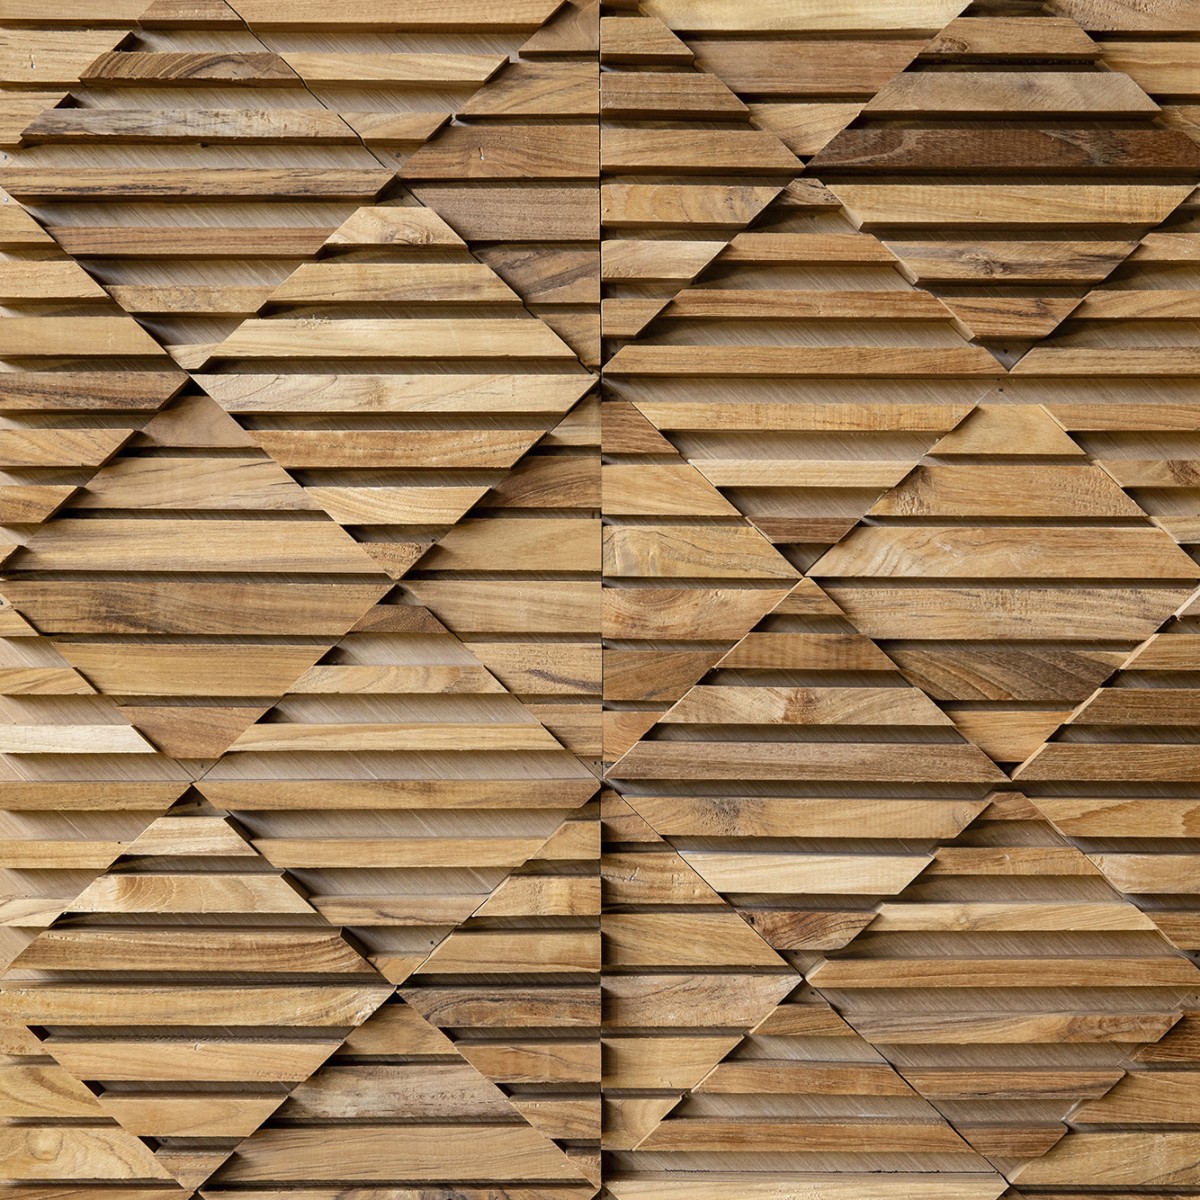 Panouri decorative din lemn TeakWall TW-Blend, material: